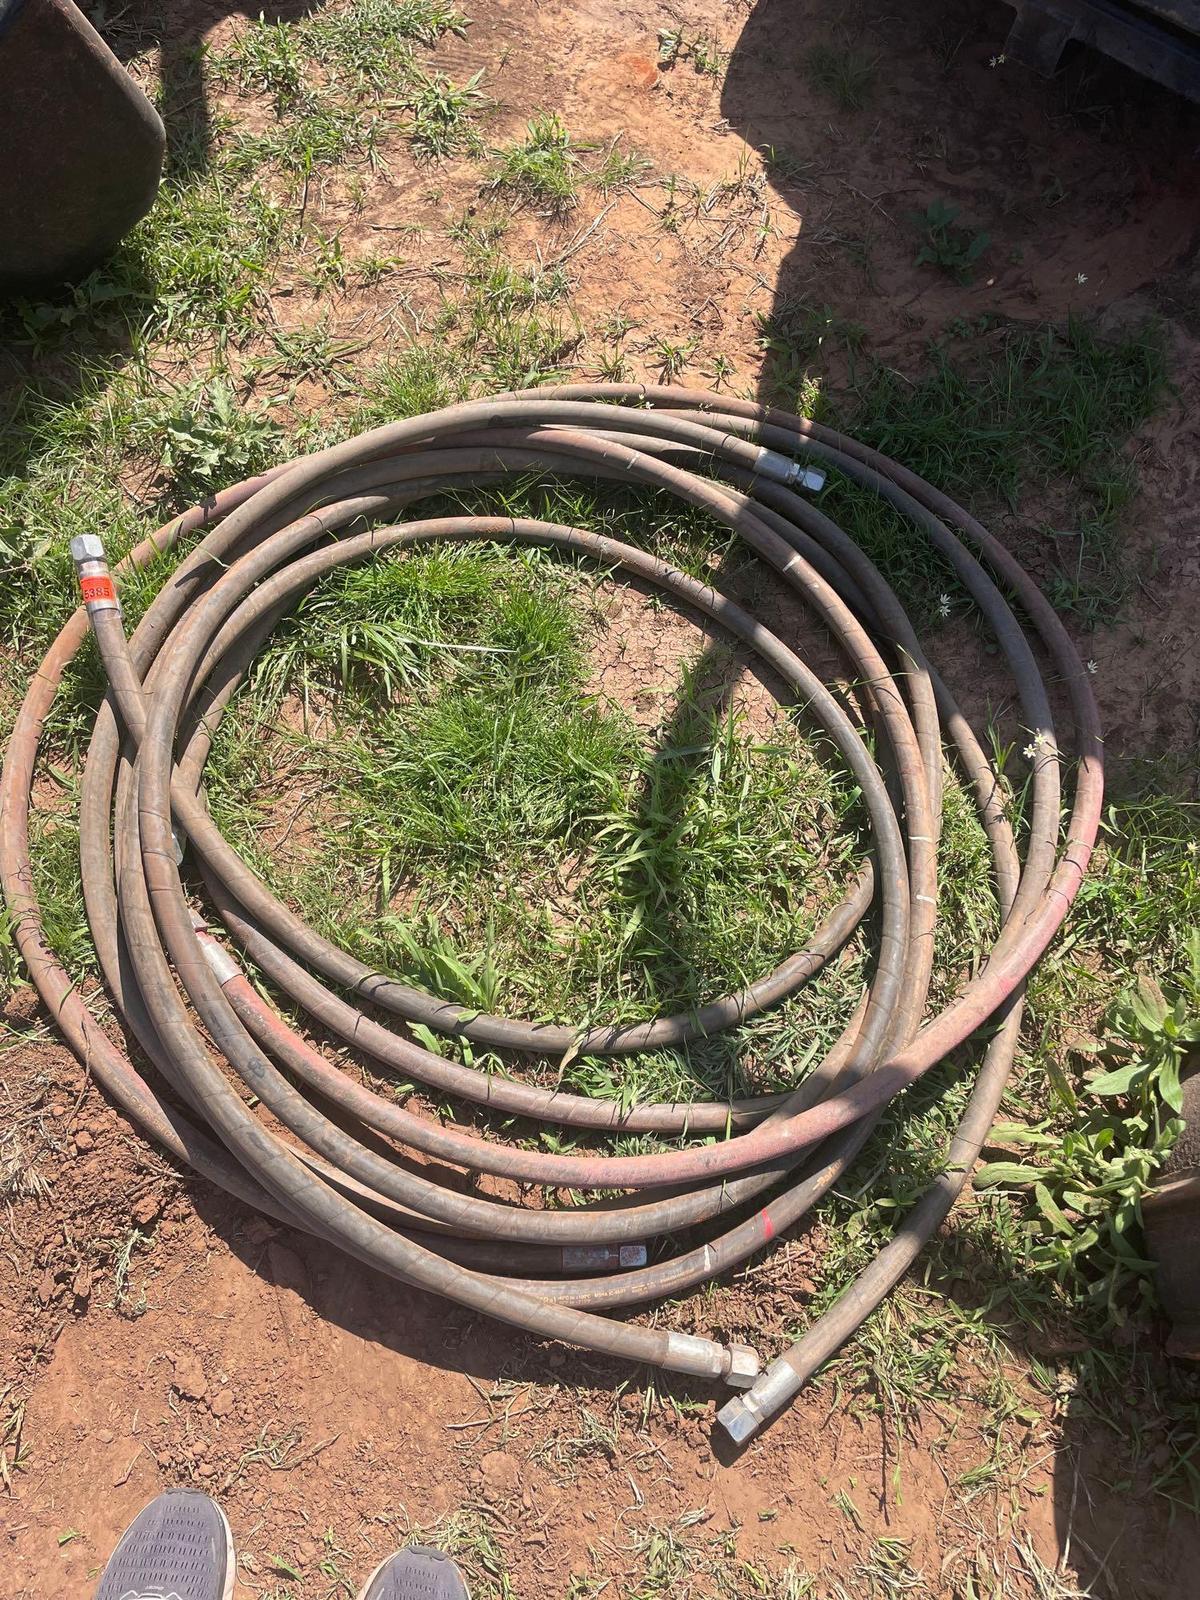 6 high pressure hoses